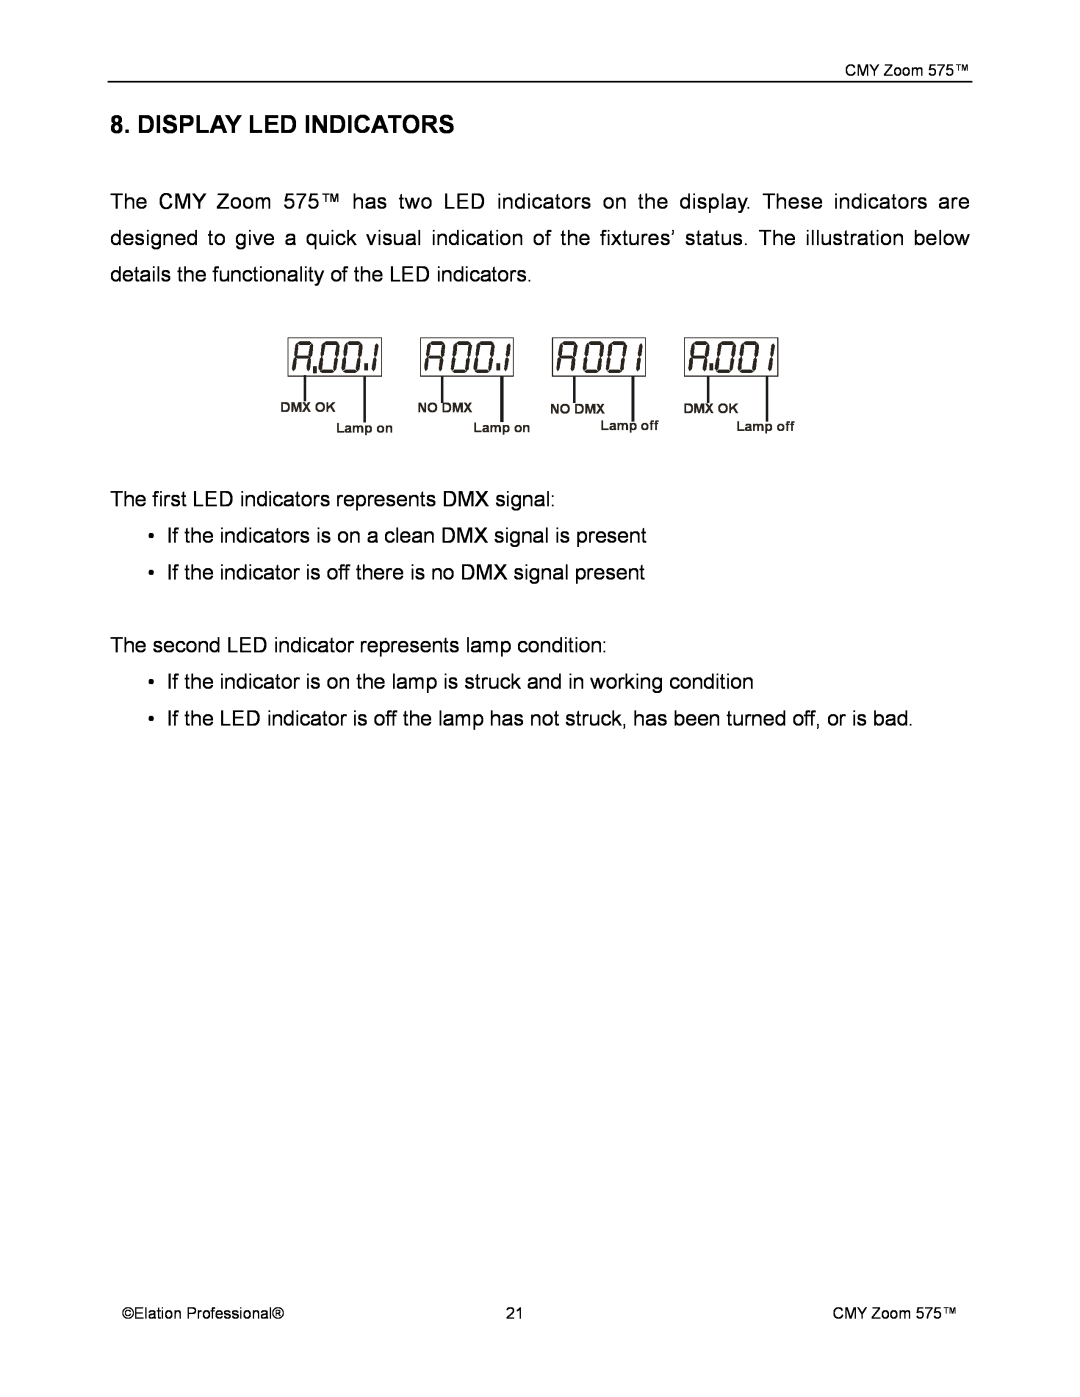 Elation Professional CMY Zoom 575 user manual Display Led Indicators 